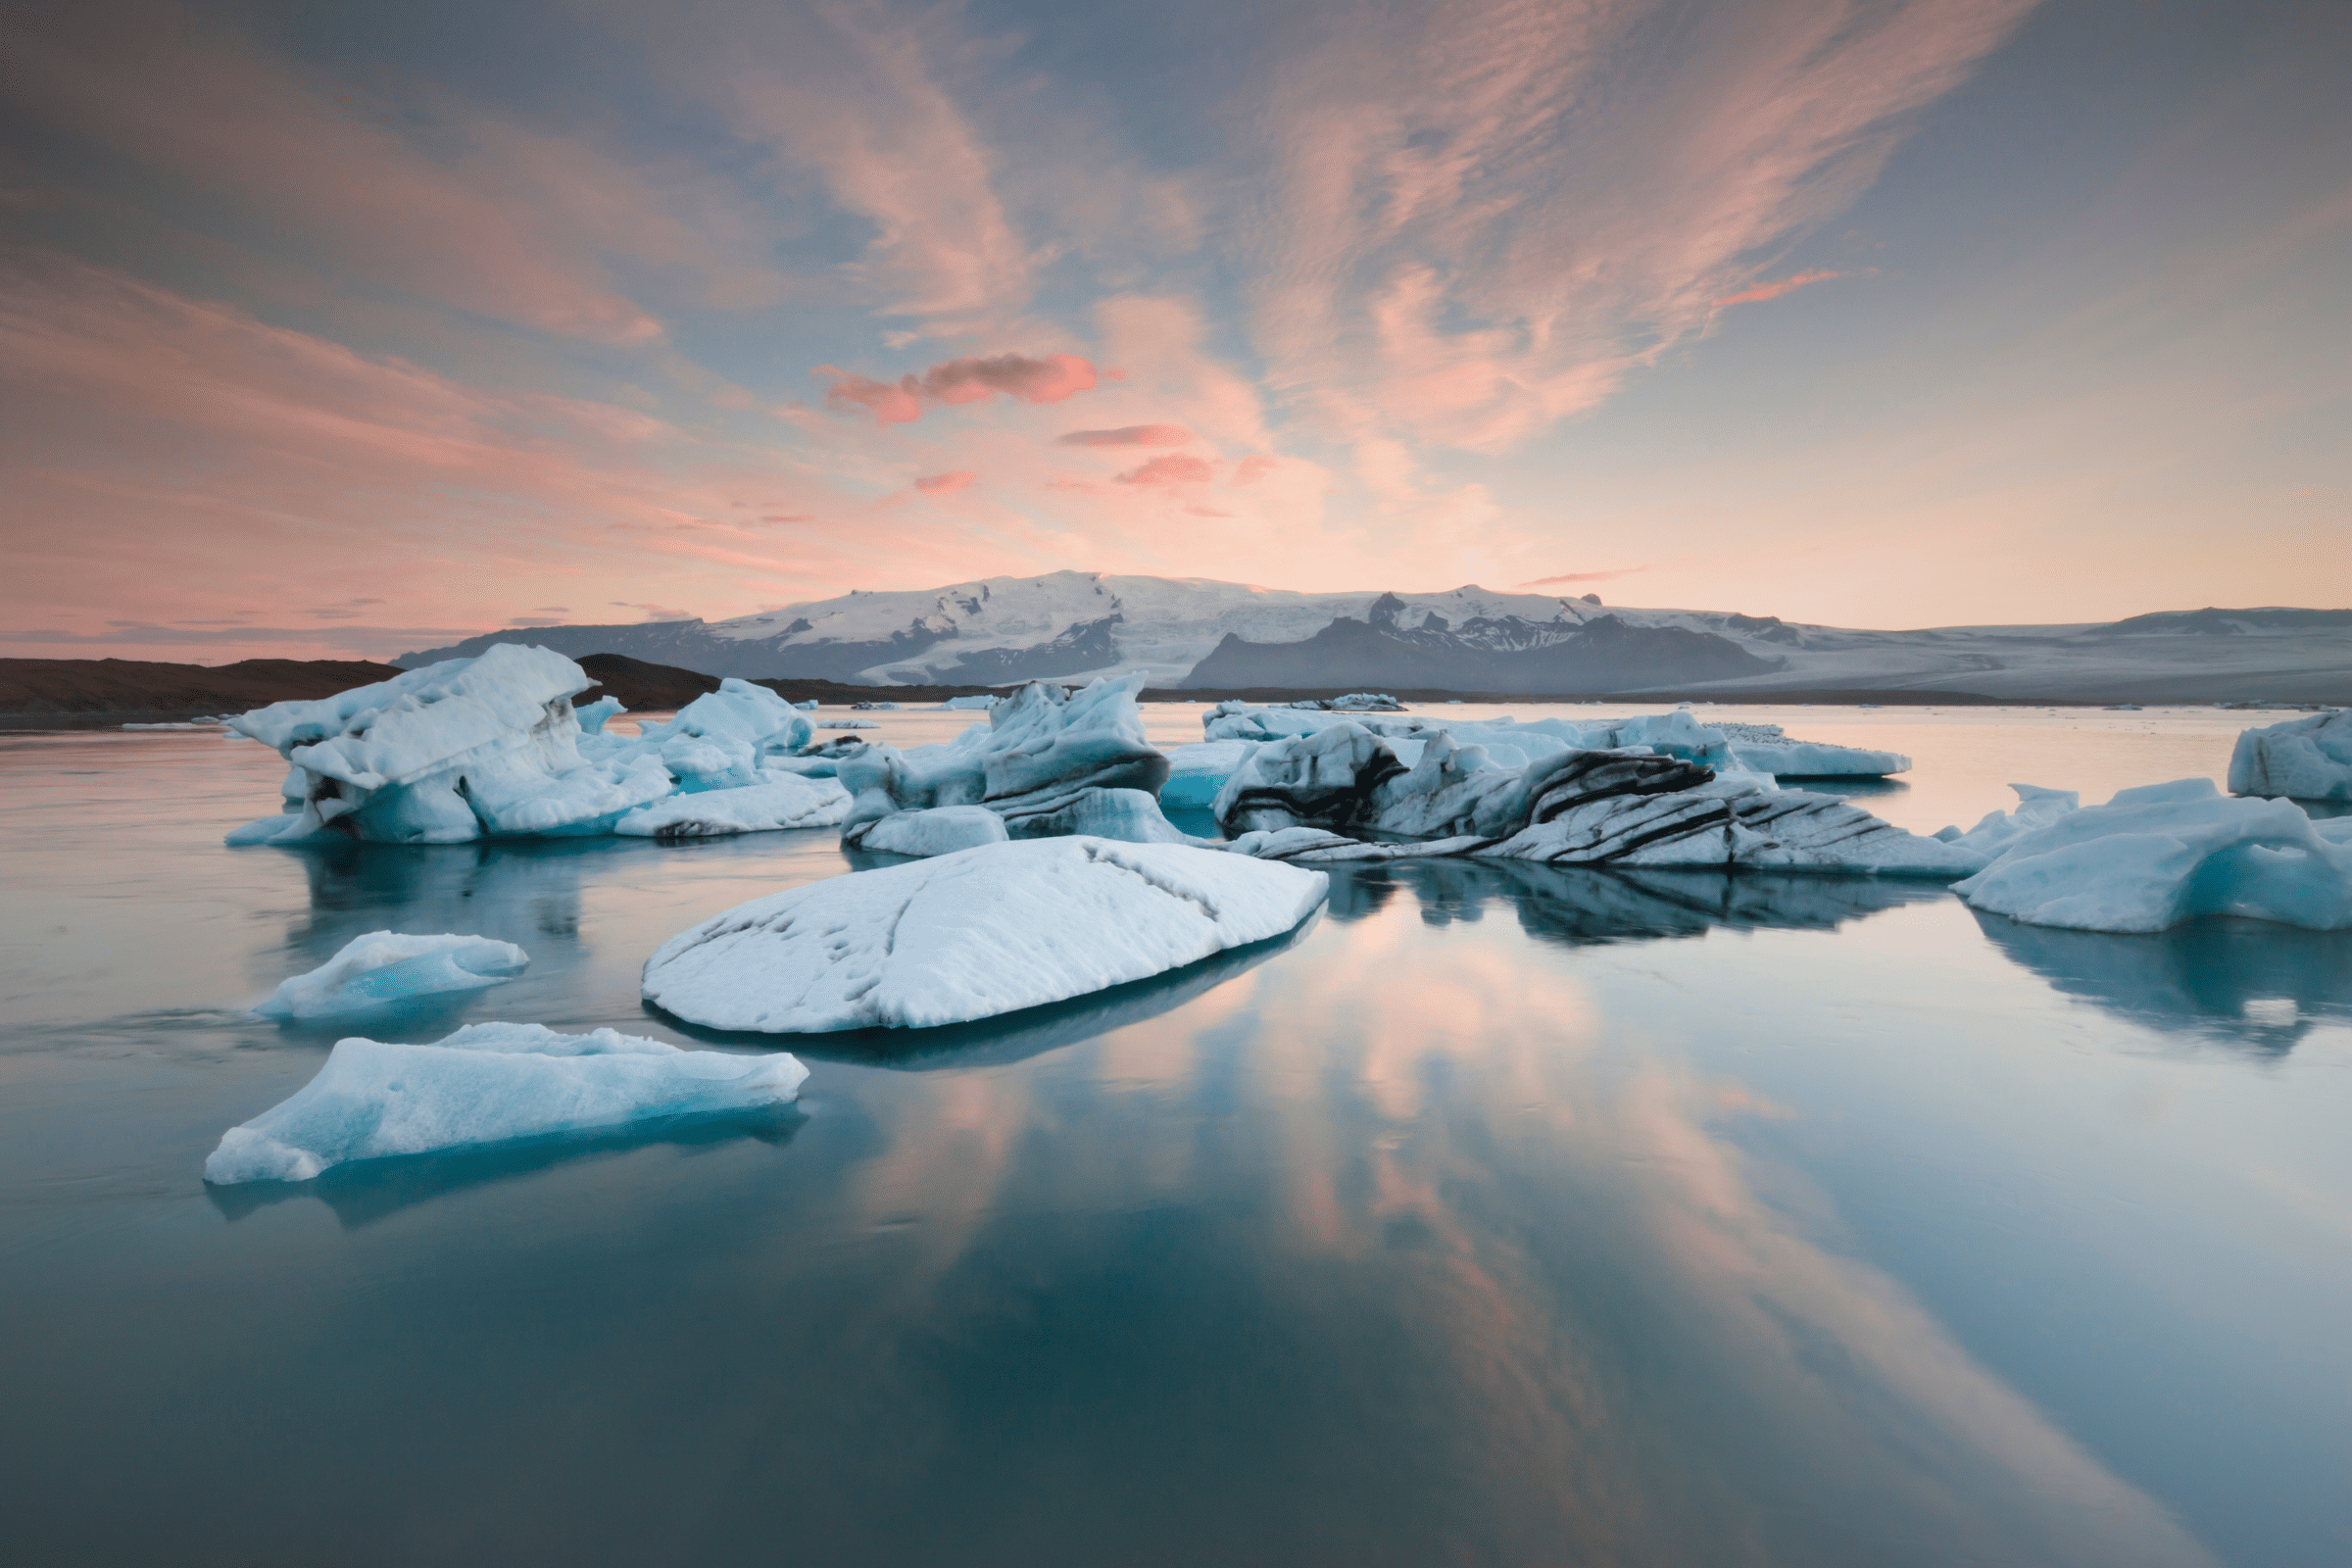 Pink skies over icebergs at Jokulsarlon Glacier Lagoon in southeast Iceland.